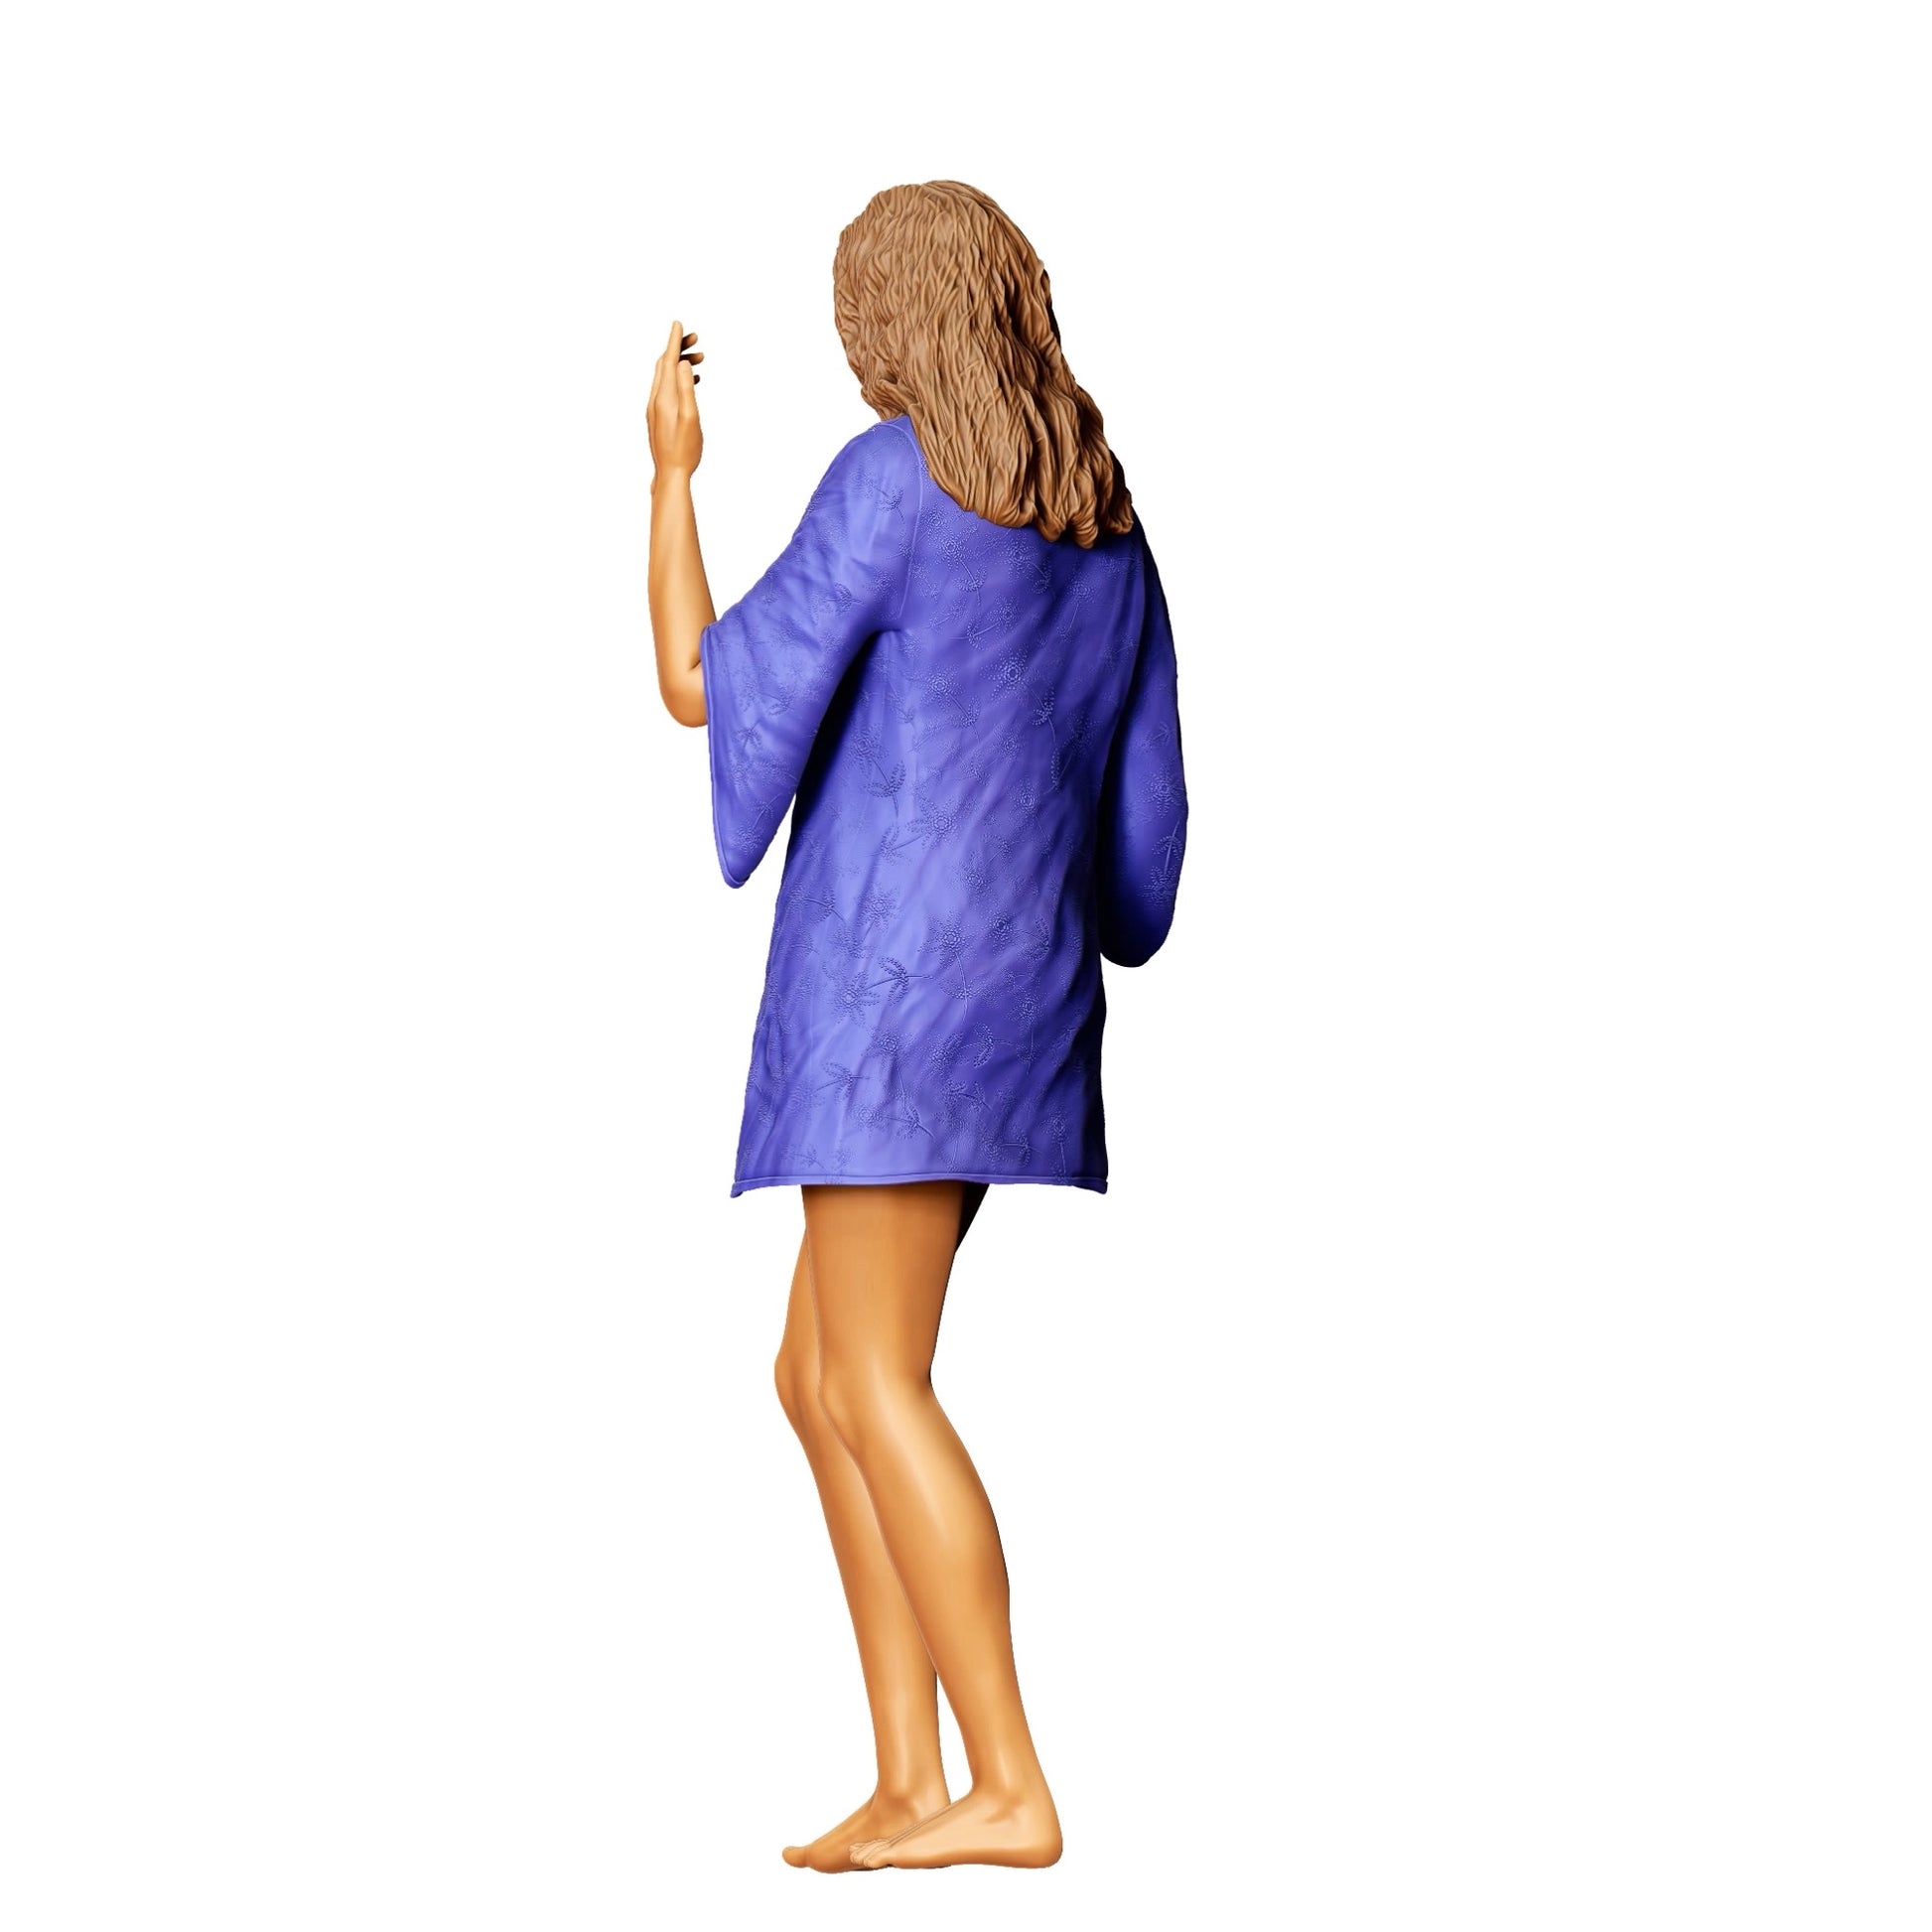 Diorama Modellbau Produktfoto 0: Pool Party Gäste - Frau im Bikini mit Sektglas 2 (Ref. Nr. 326)